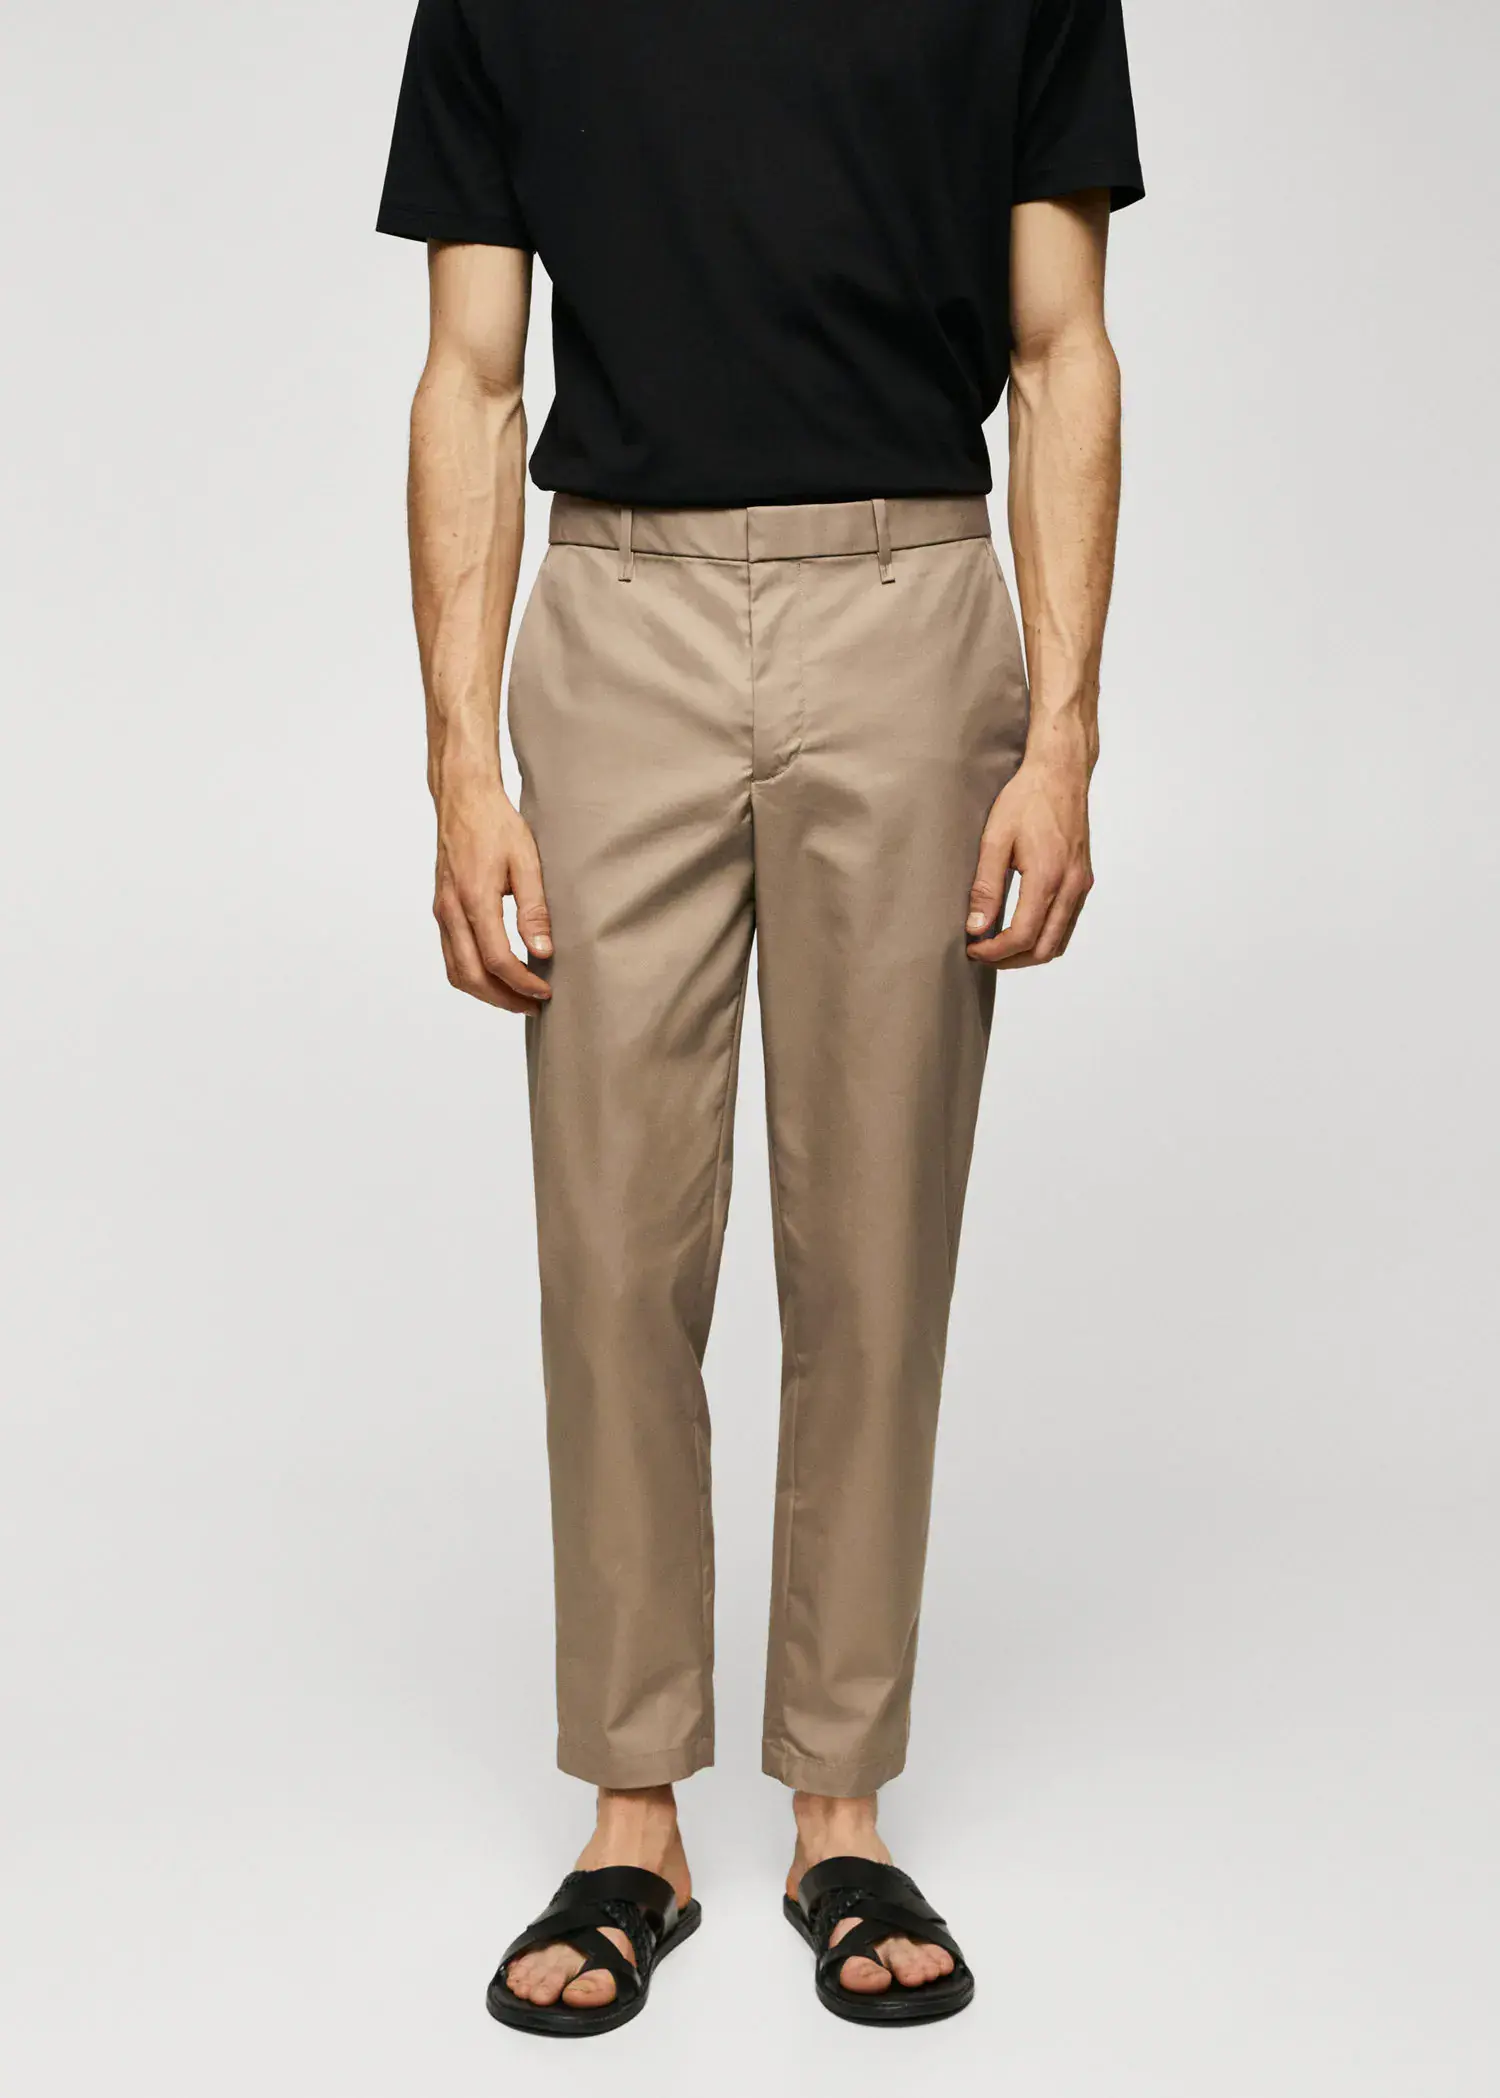 Mango Slim-fit cotton pants. a man wearing a black shirt and beige pants. 